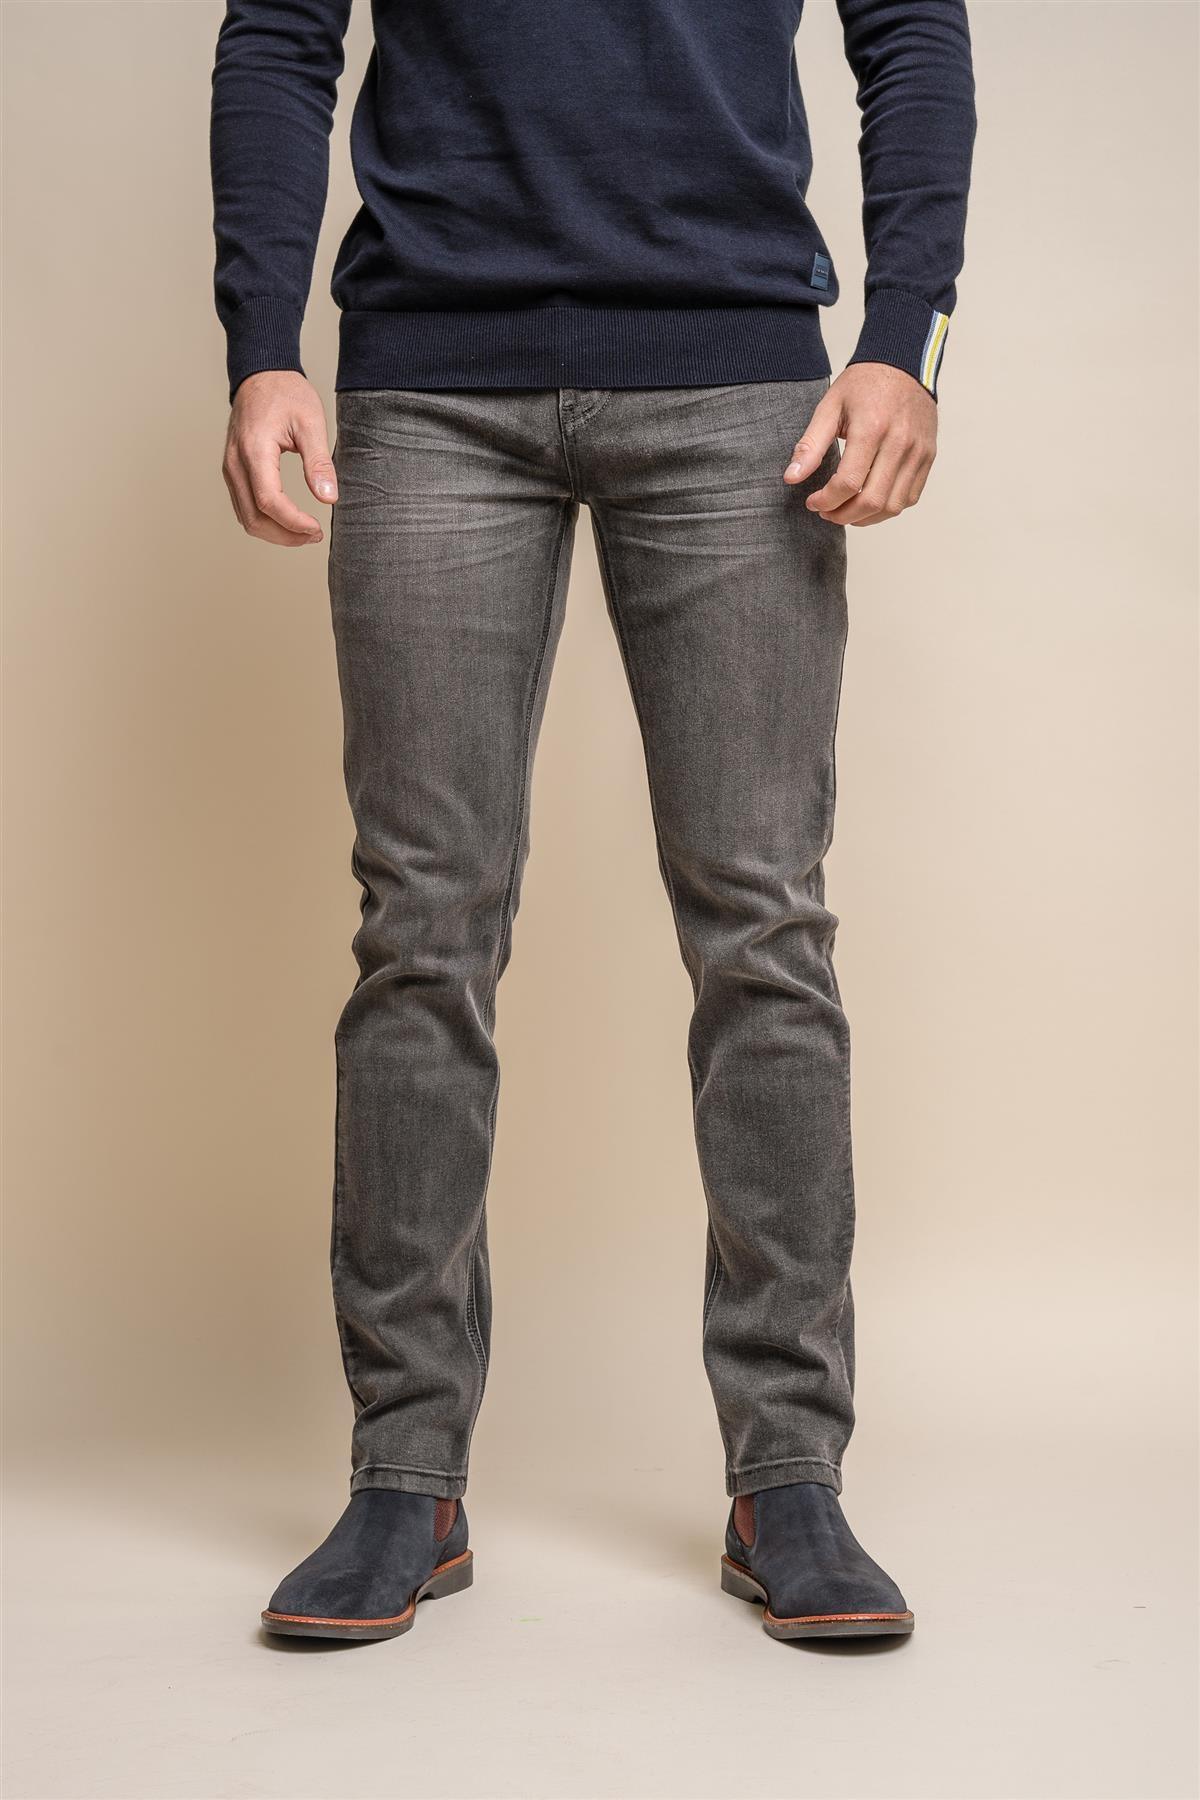 Evans grey jeans front